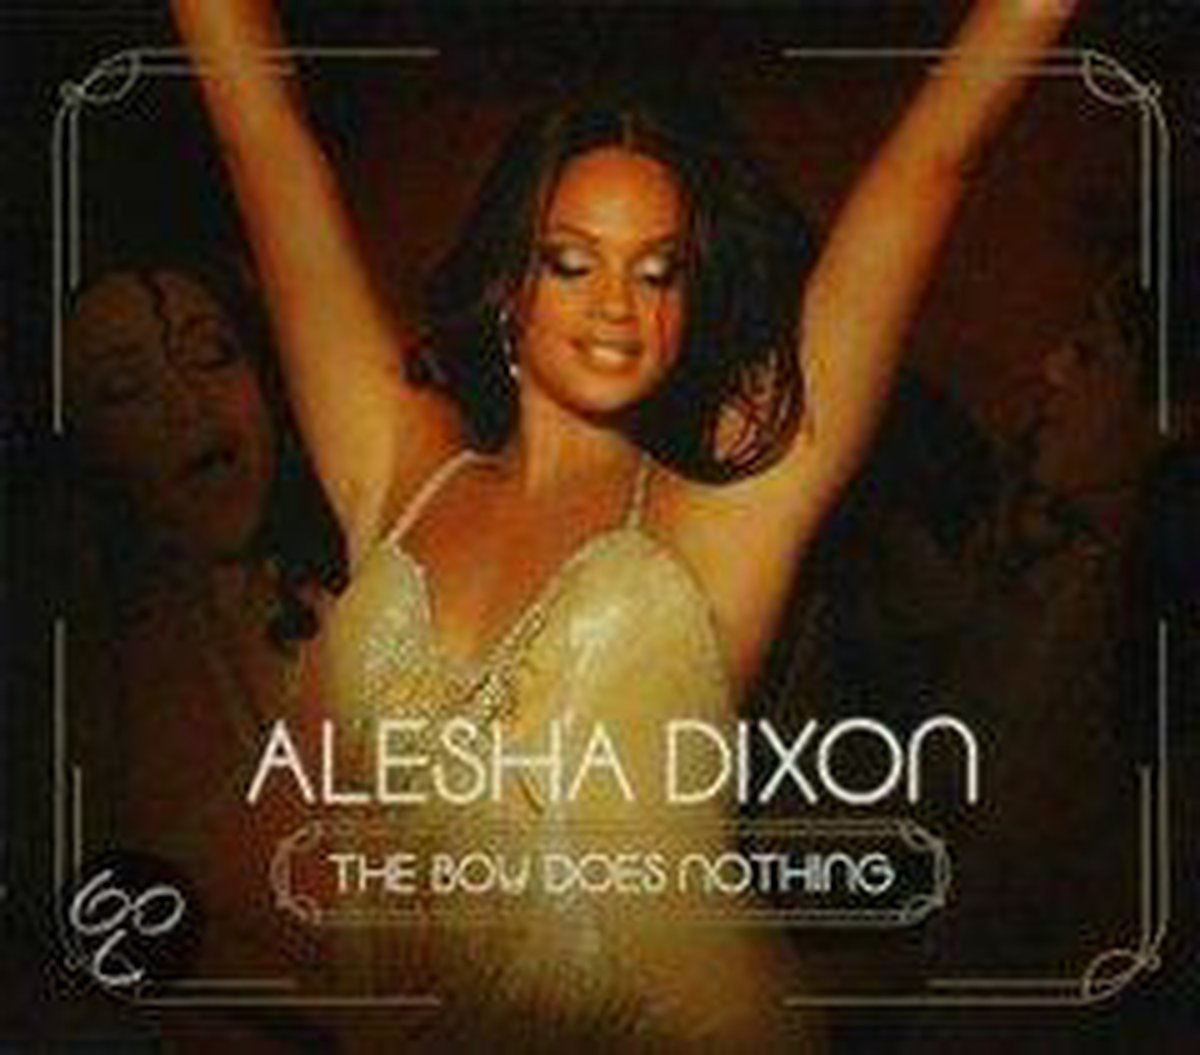 Boy Does Nothing -1tr- - Alesha Dixon